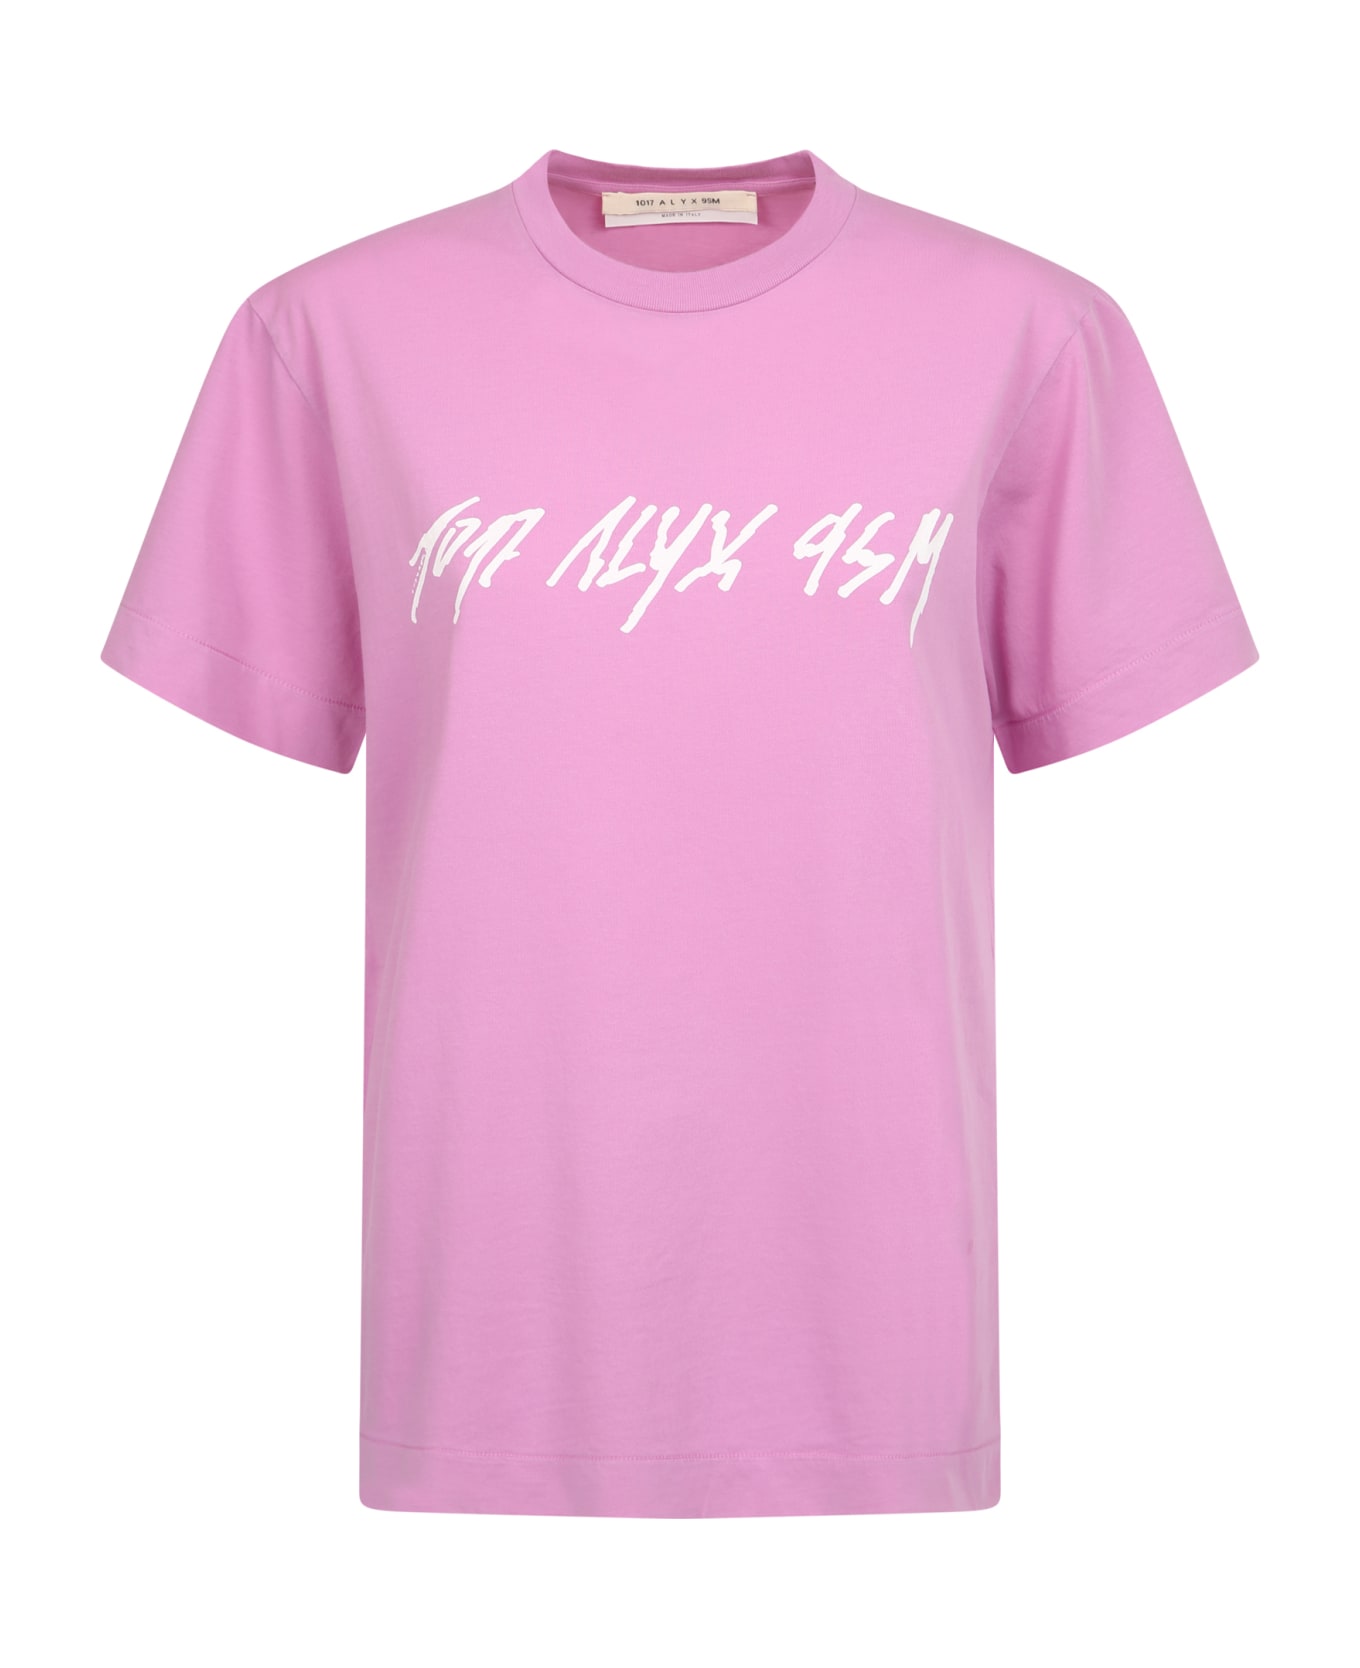 1017 ALYX 9SM Cotton T-shirt - Pink